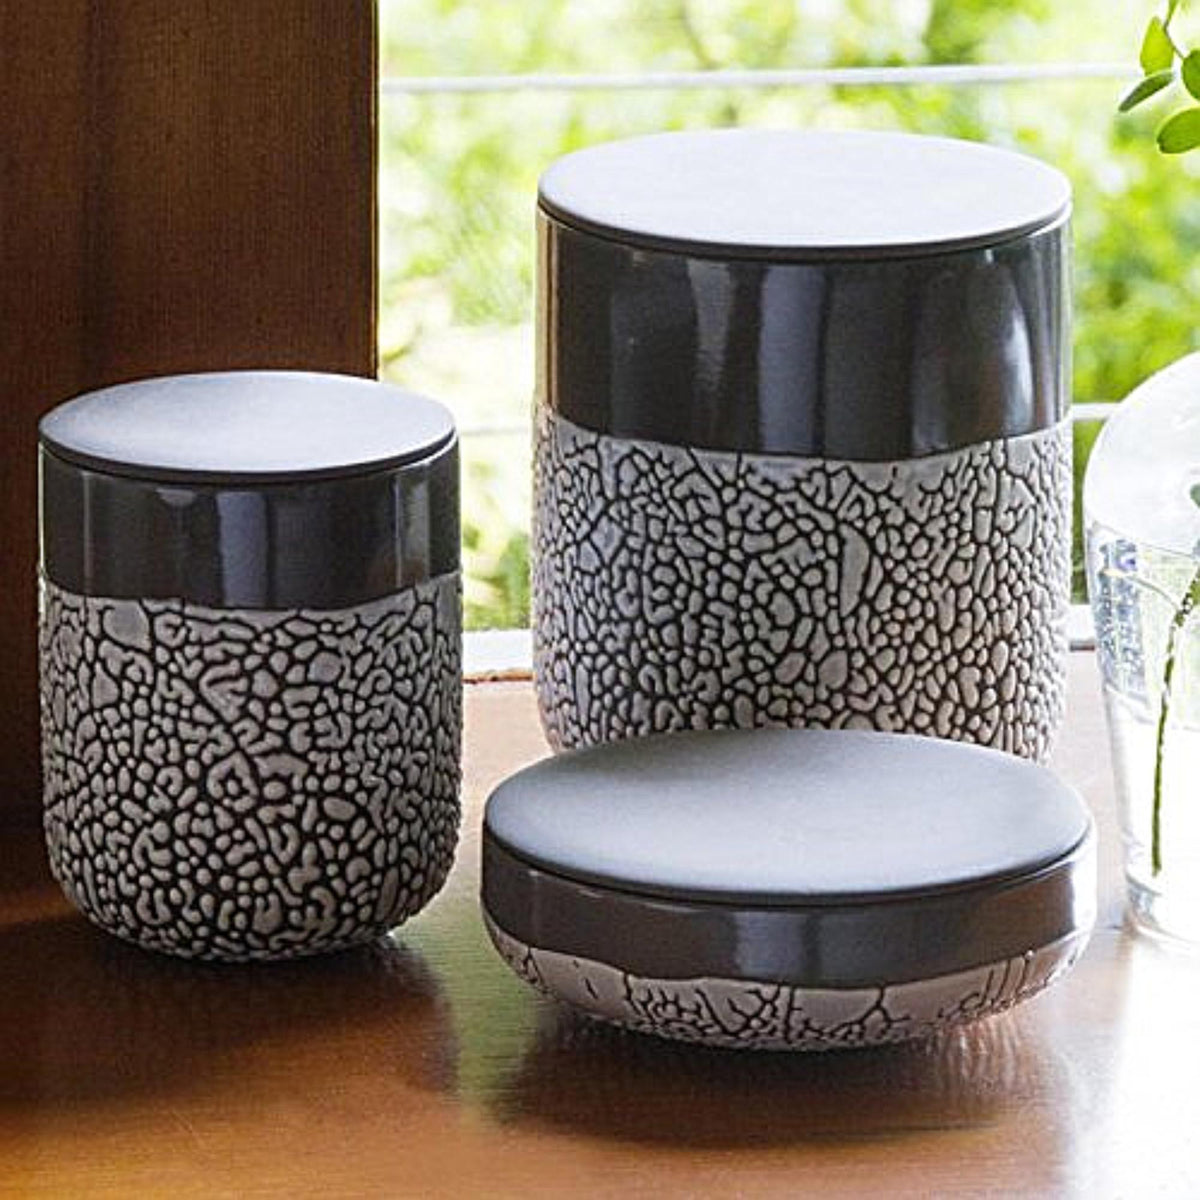 HOSLEY®  Ceramic Lichen Box Mid Century Modern, Set of 2, 6.5 inches High each